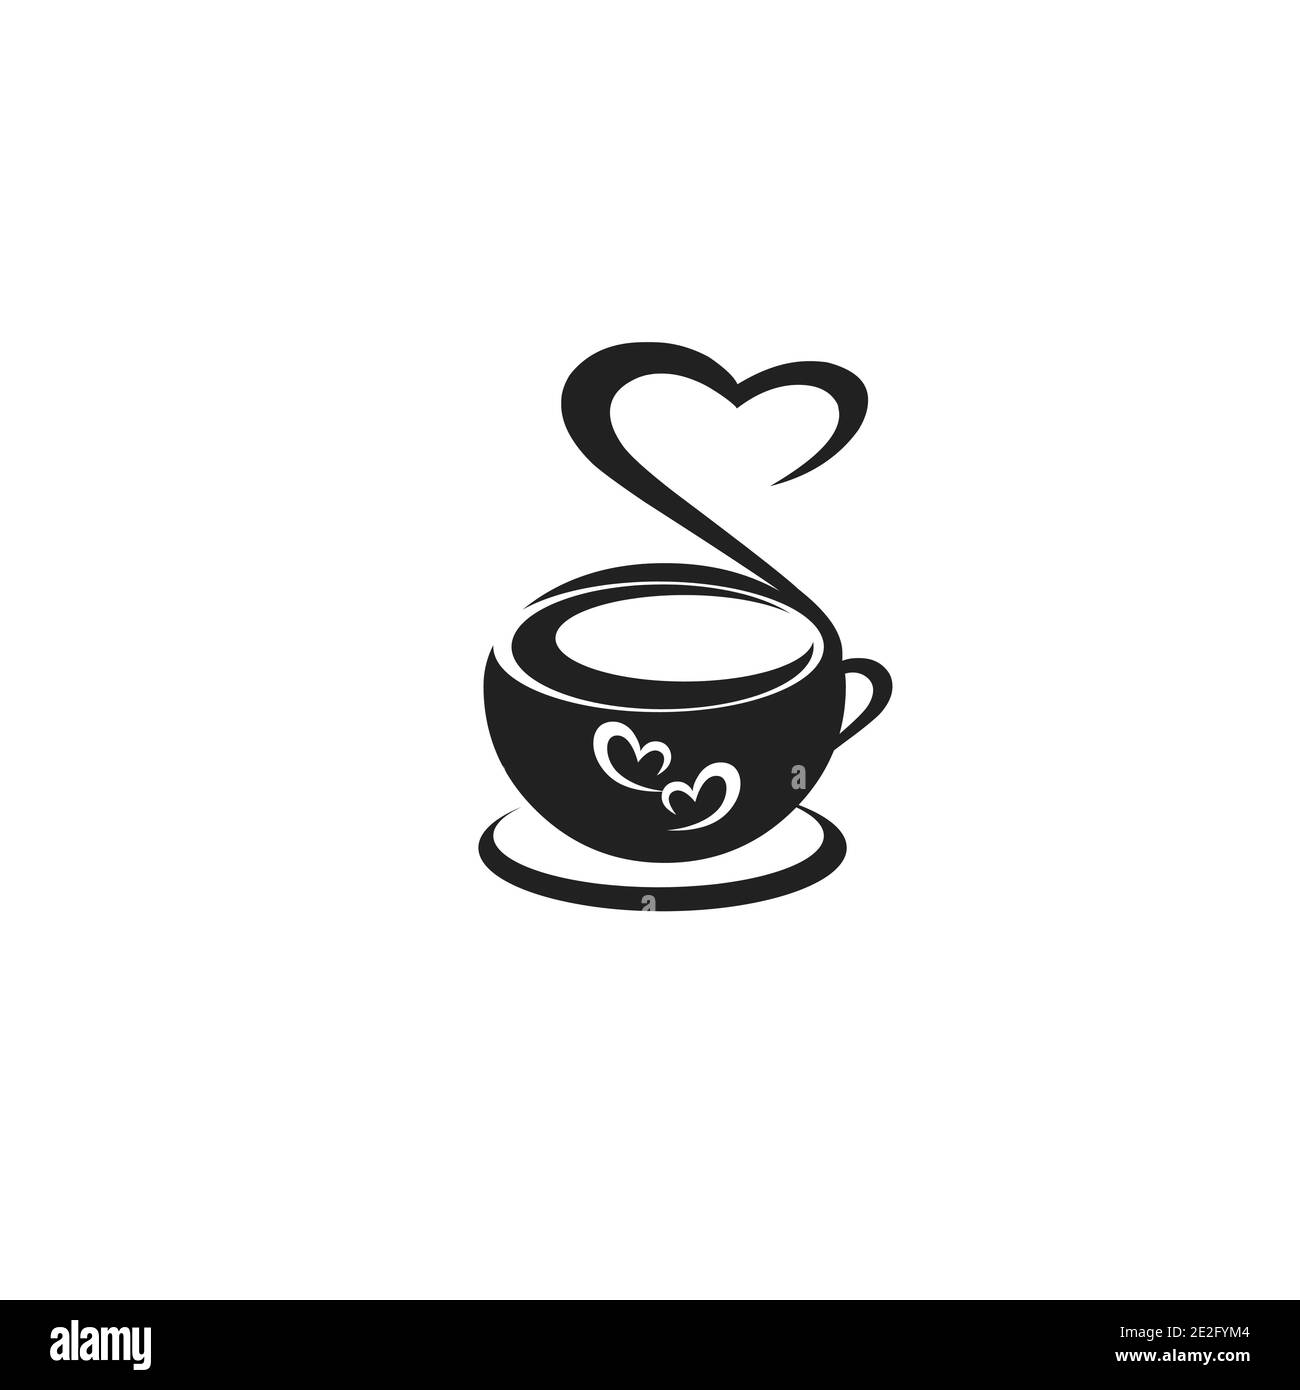 Café-Shop und Kaffeehaus heiß und kalt Kaffee Restaurant Café Vektor Illustrator Logo Design. Stock Vektor